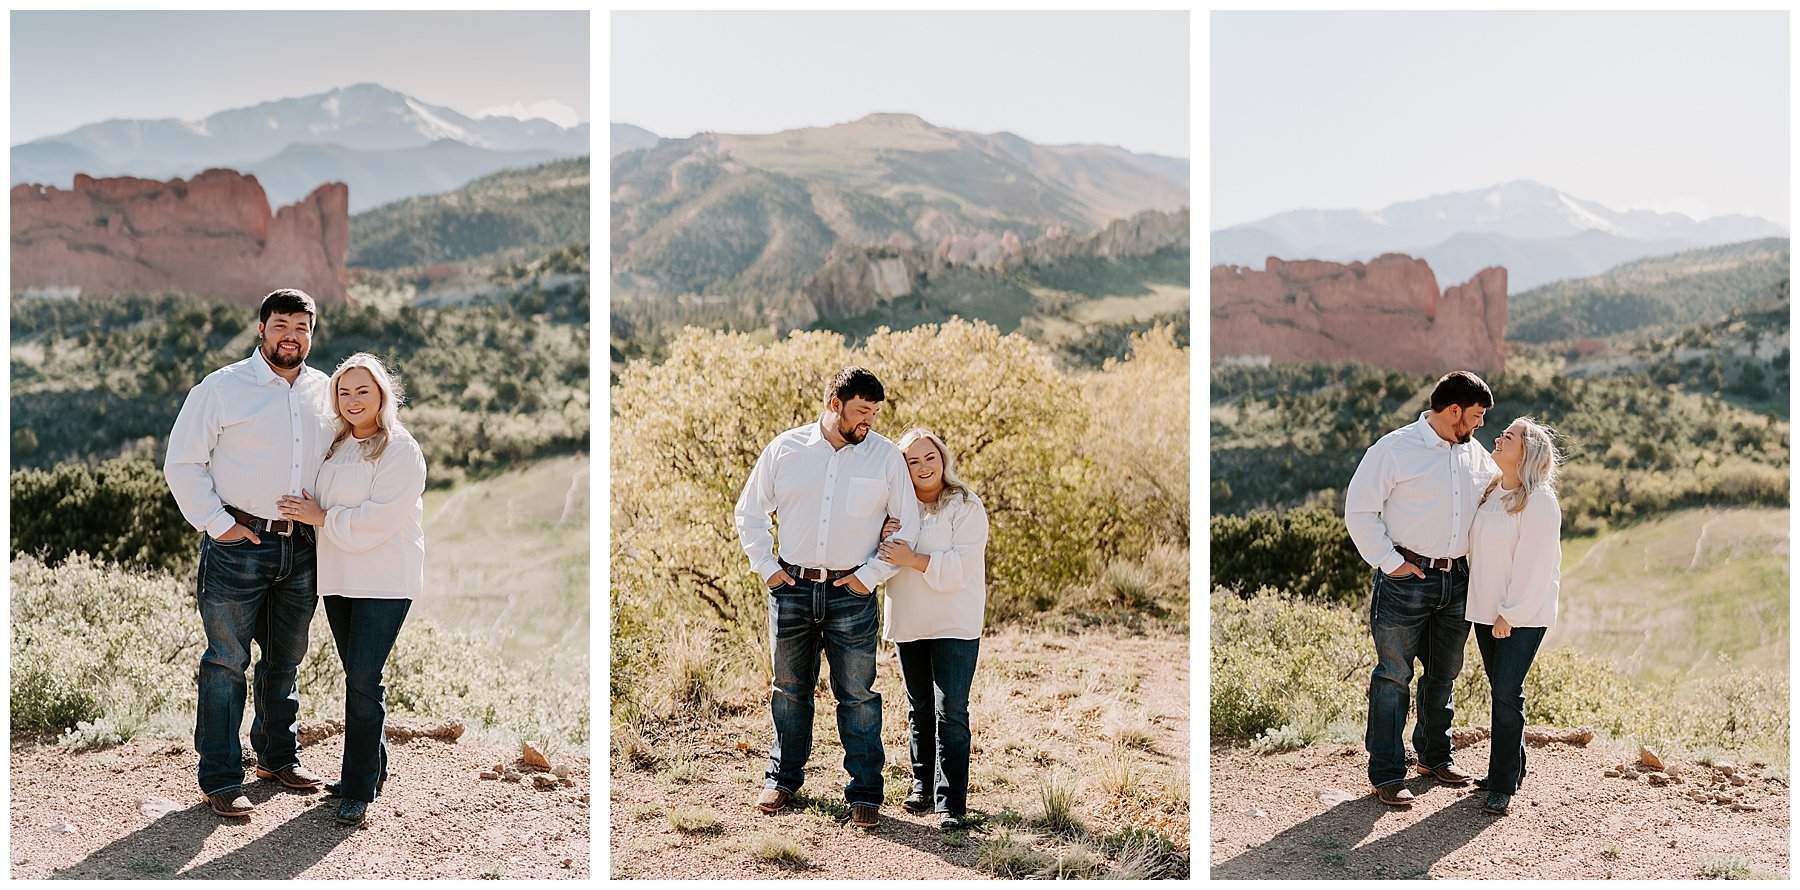 Pike's Peak Engagement Session | Ashley Medrano Photography | Destination Wedding Photographer | pikes peak photos, Colorado mountain engagement photos | via ashleymedrano.com